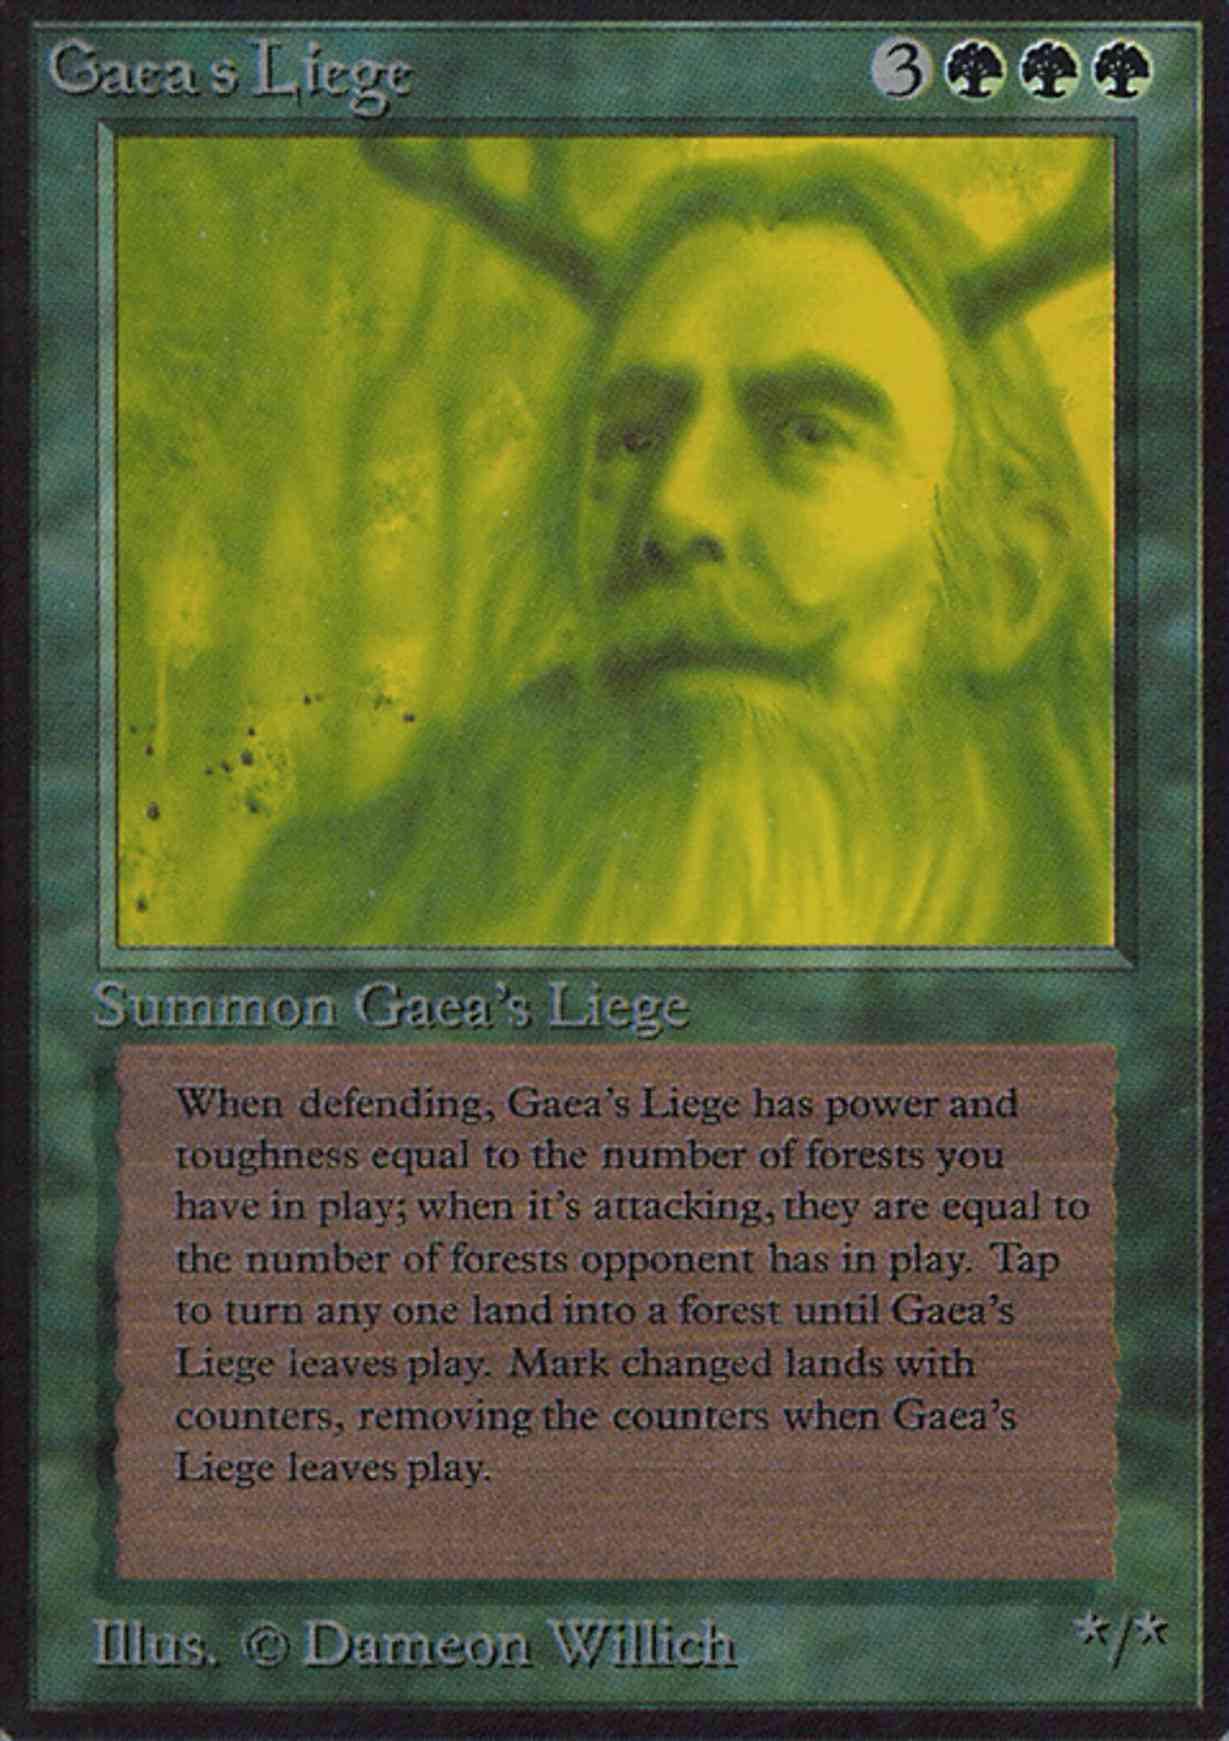 Gaea's Liege magic card front